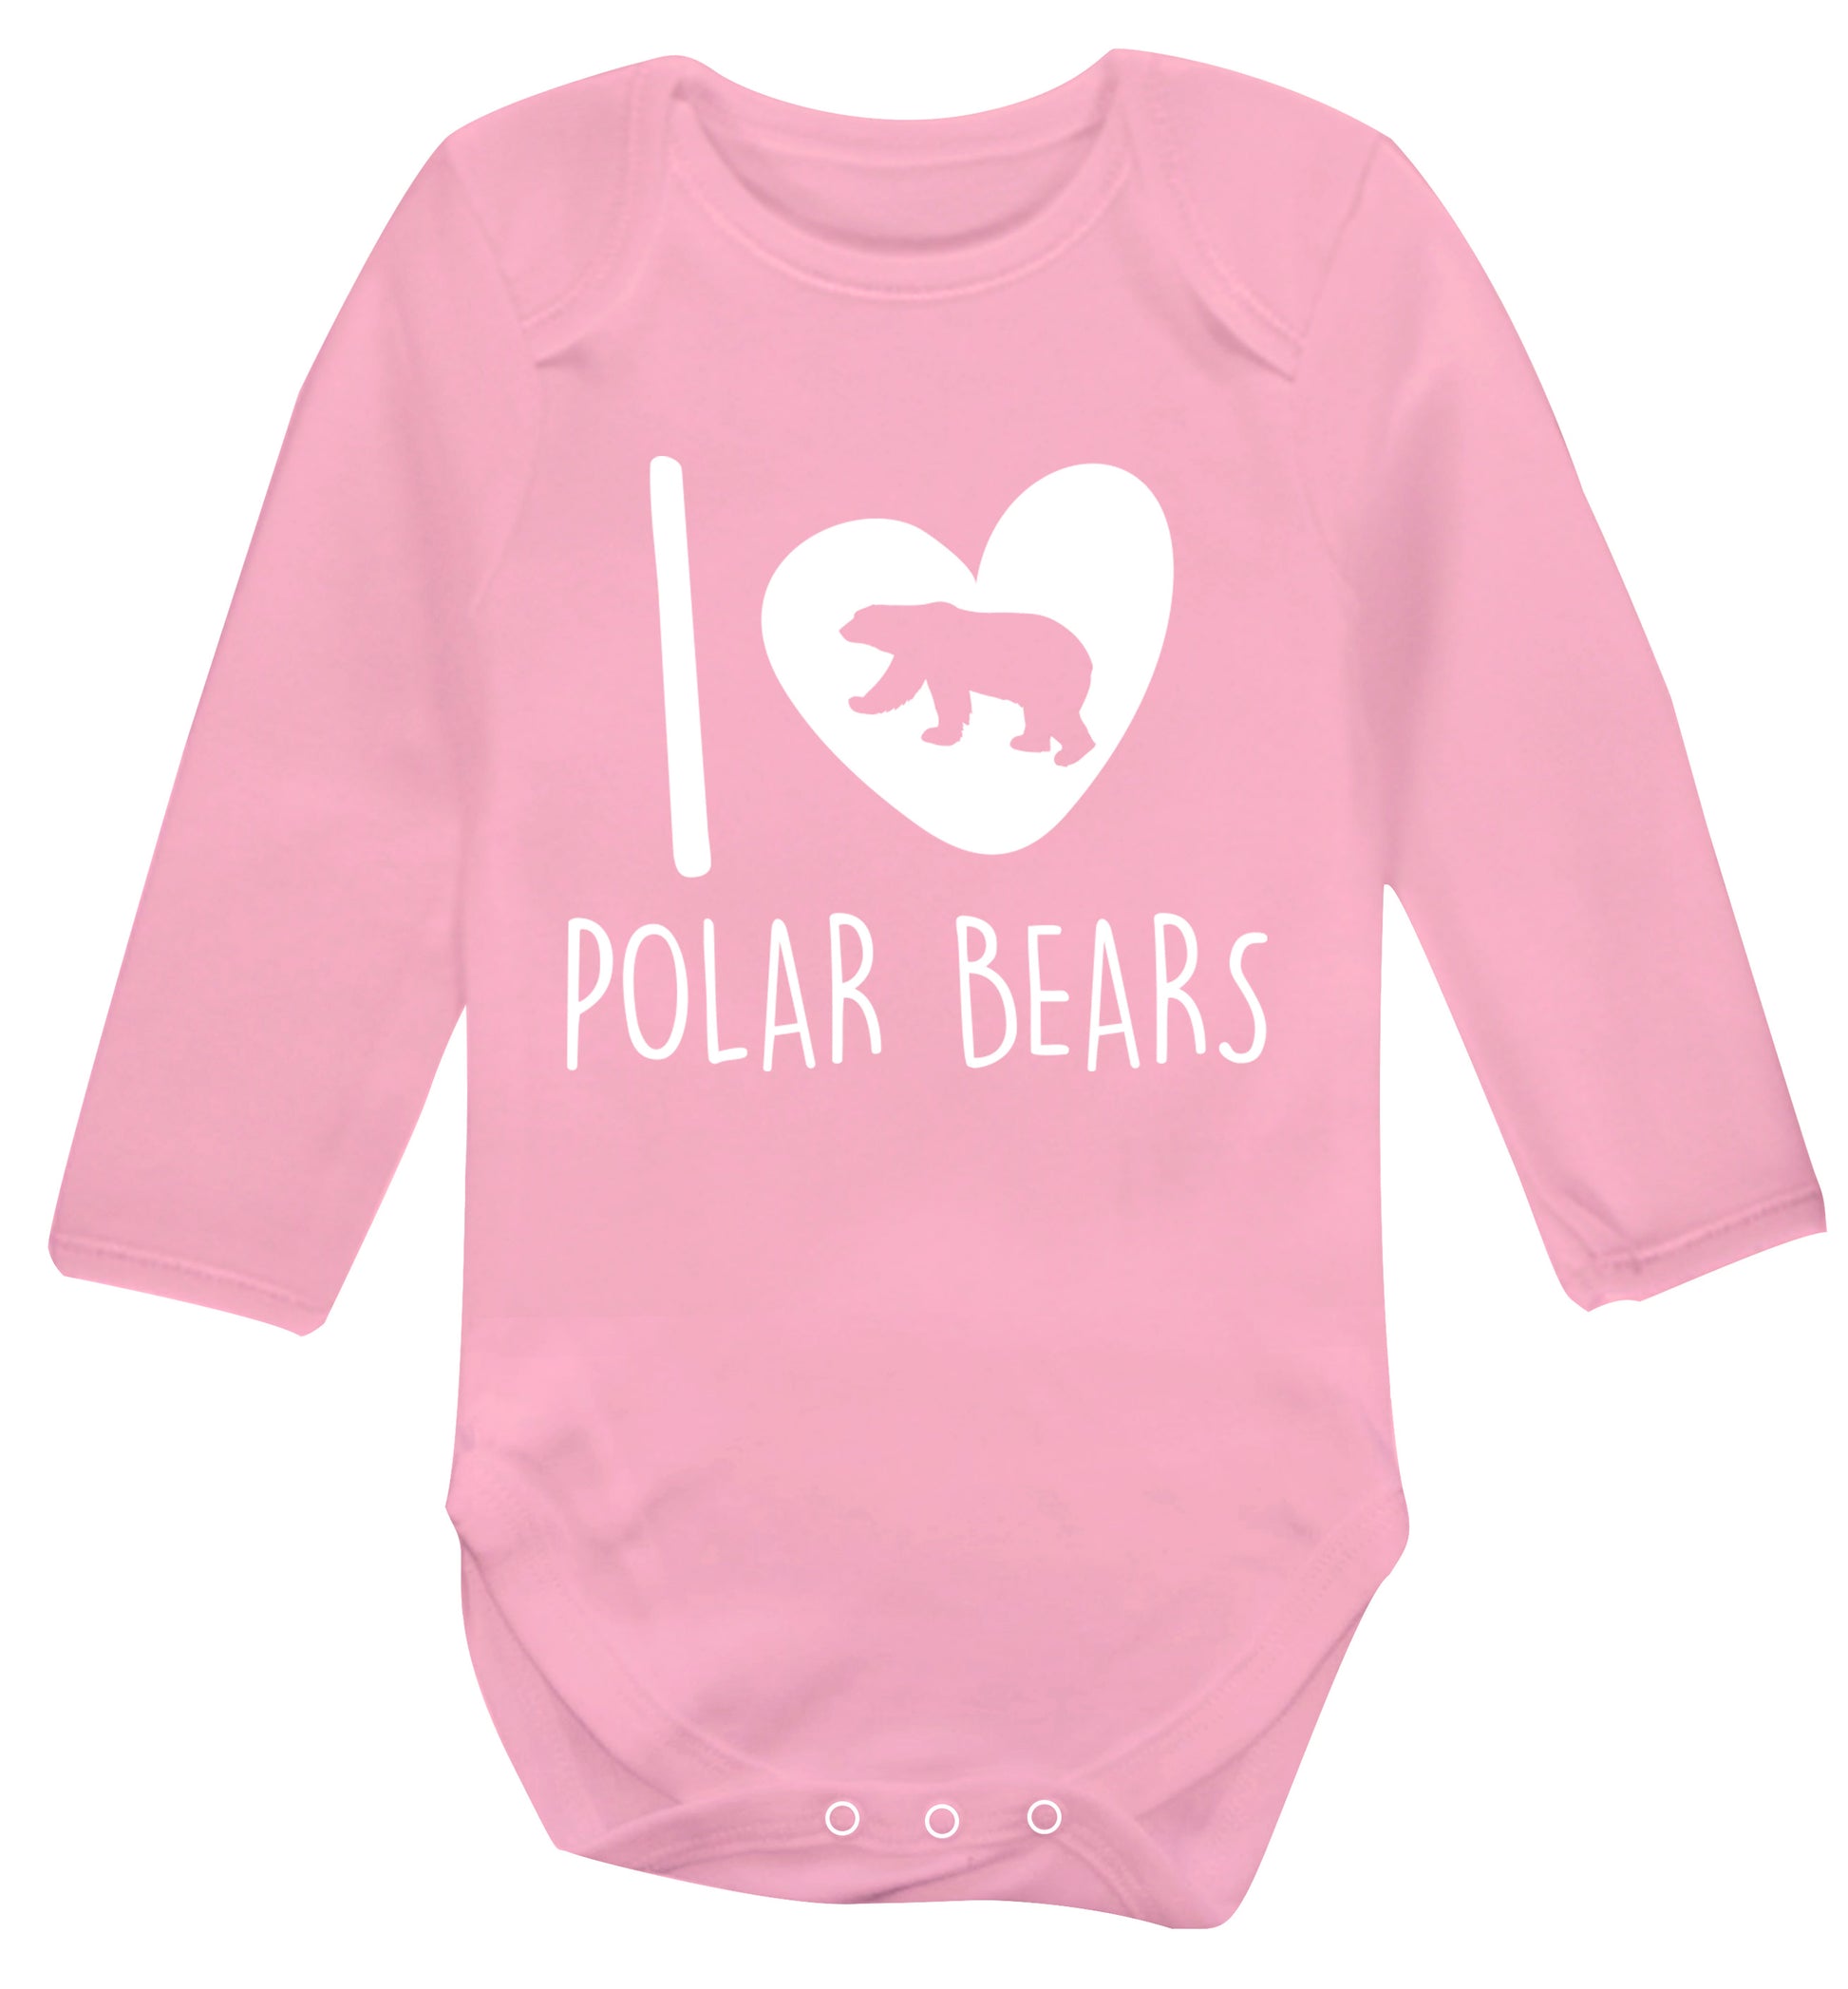 I Love Polar Bears Baby Vest long sleeved pale pink 6-12 months